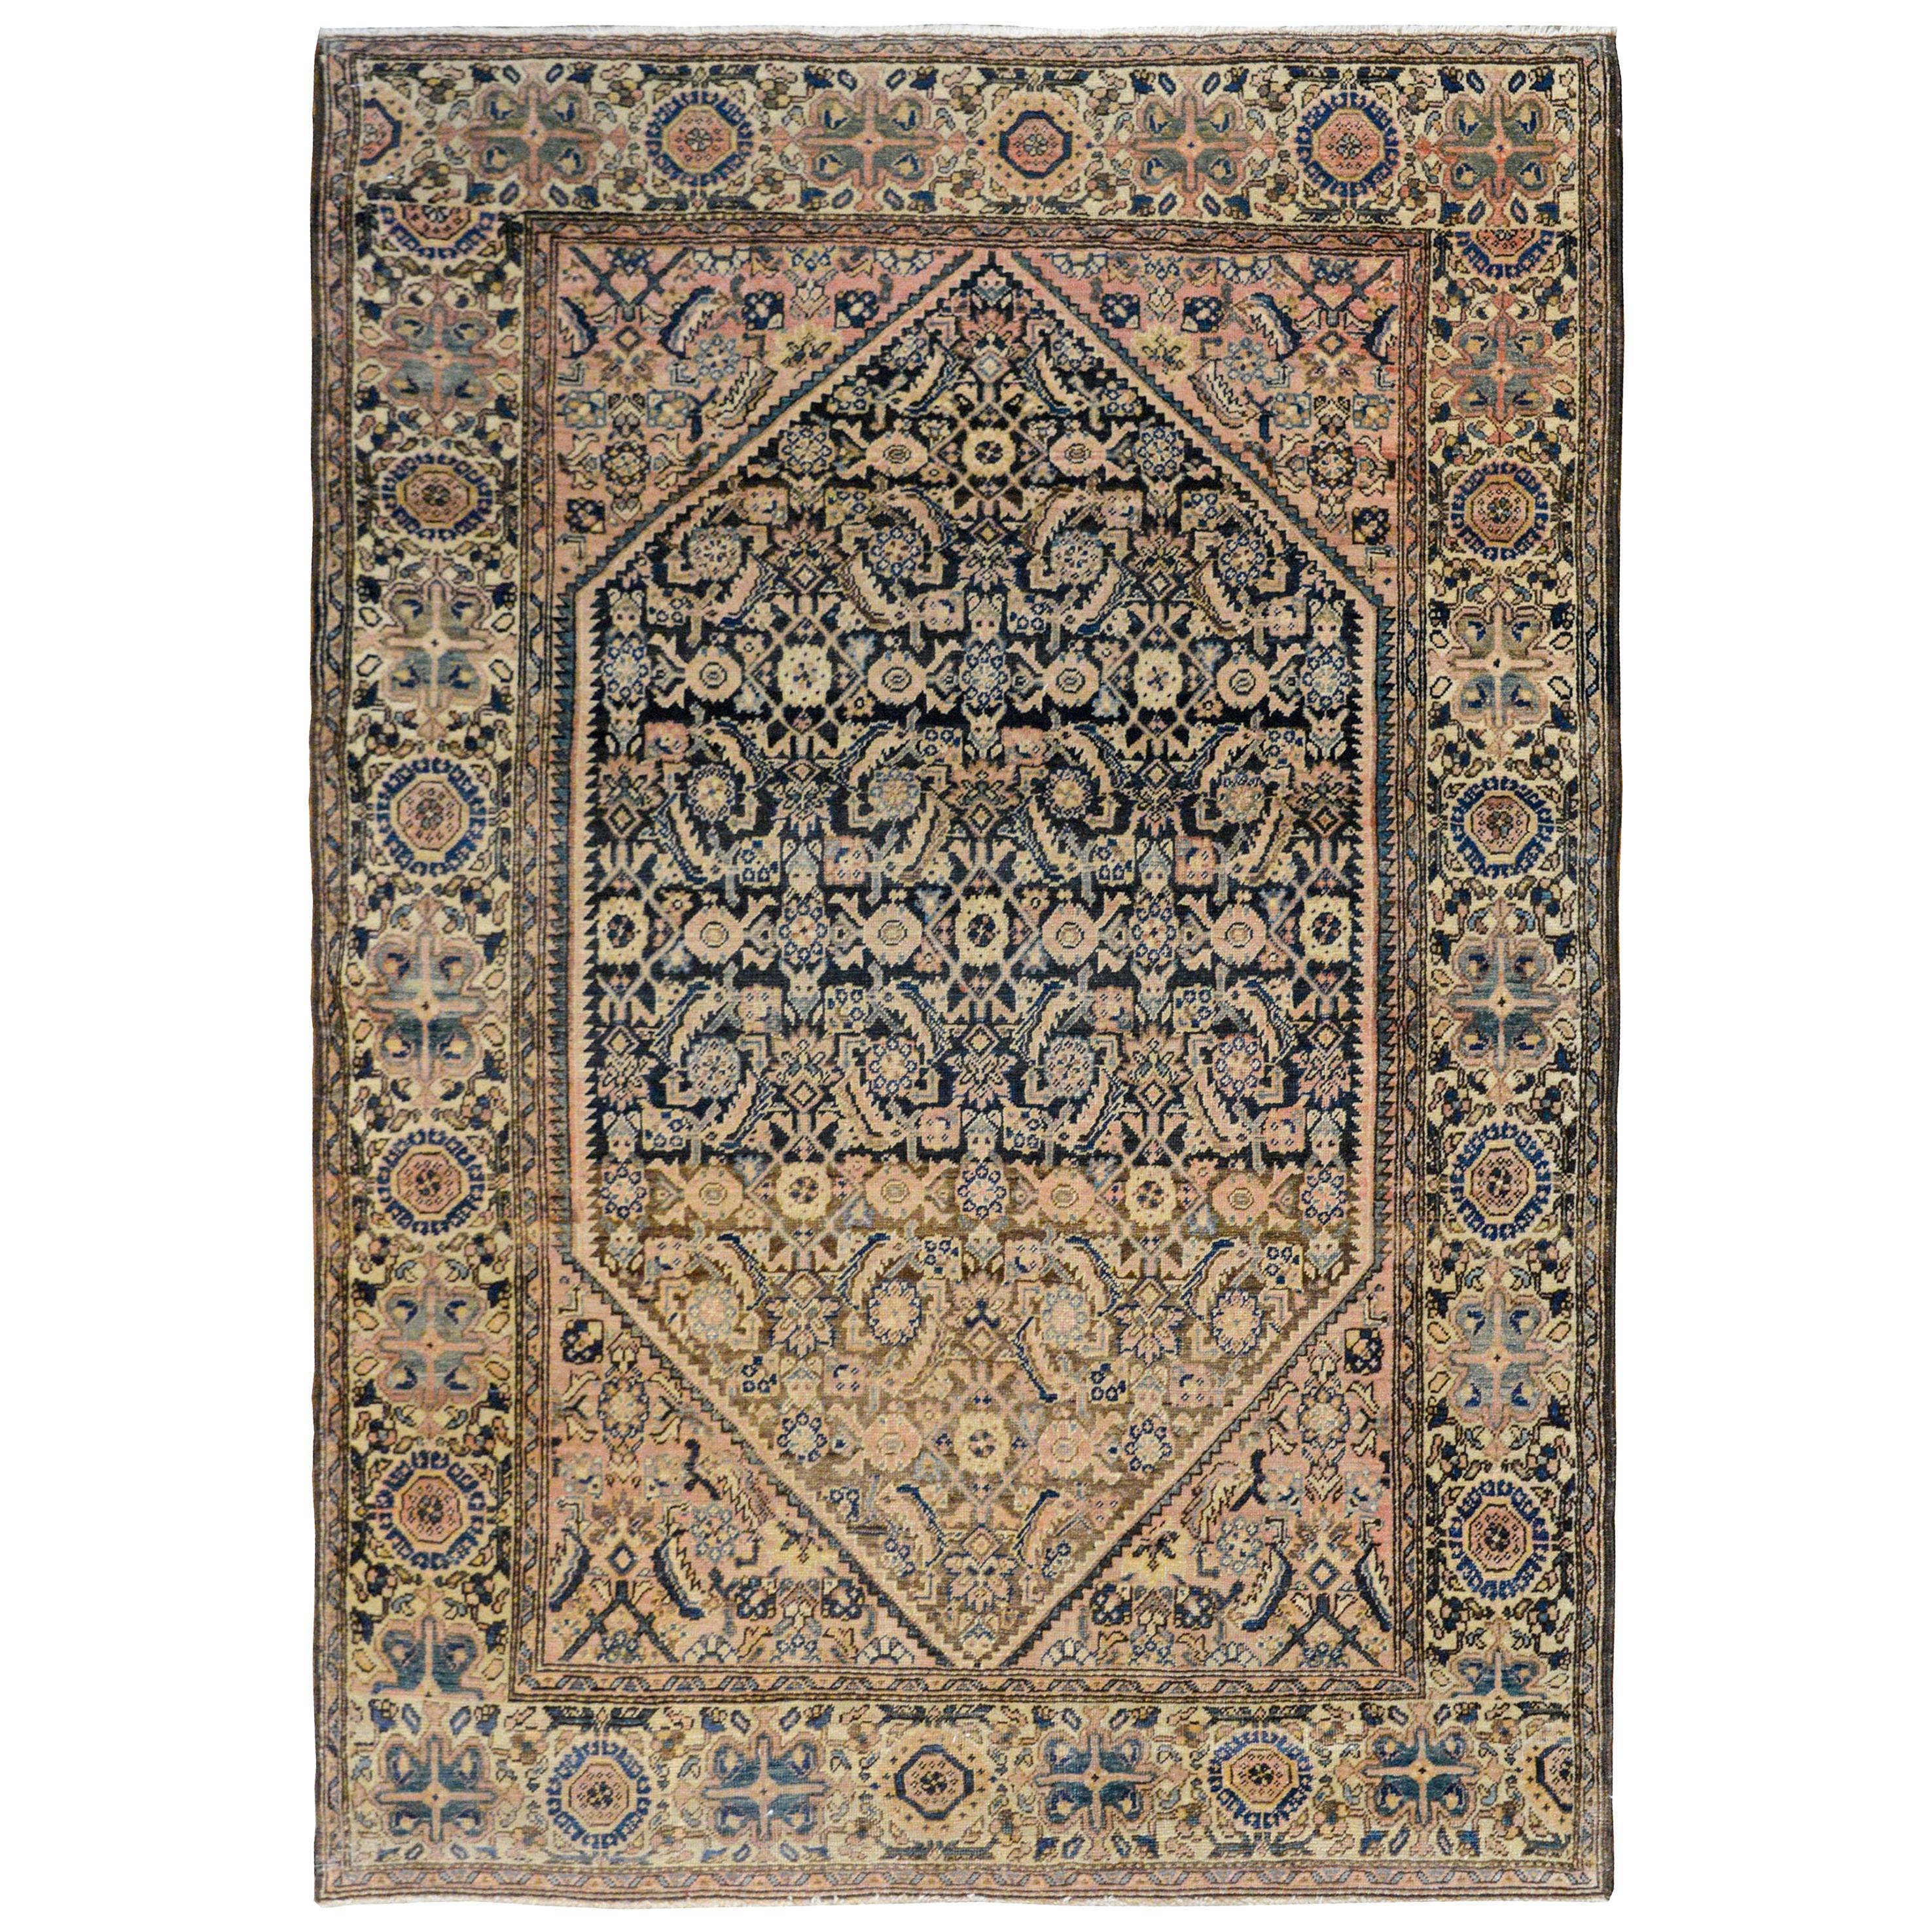 Sarouk Farahan-Teppich aus dem frühen 20. Jahrhundert